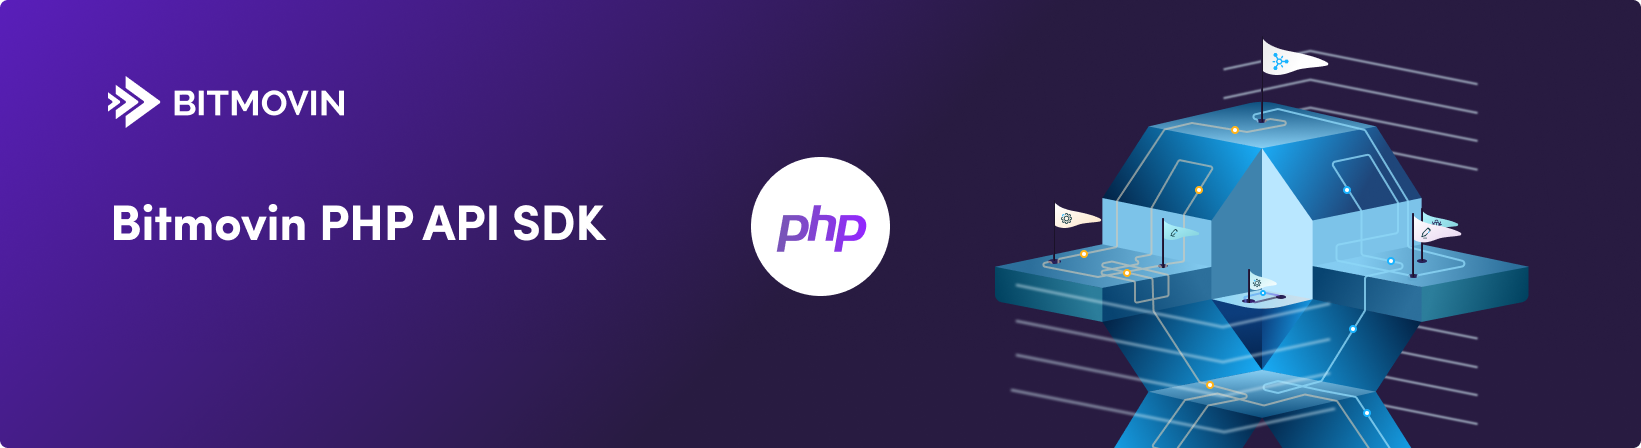 Bitmovin PHP API SDK Header